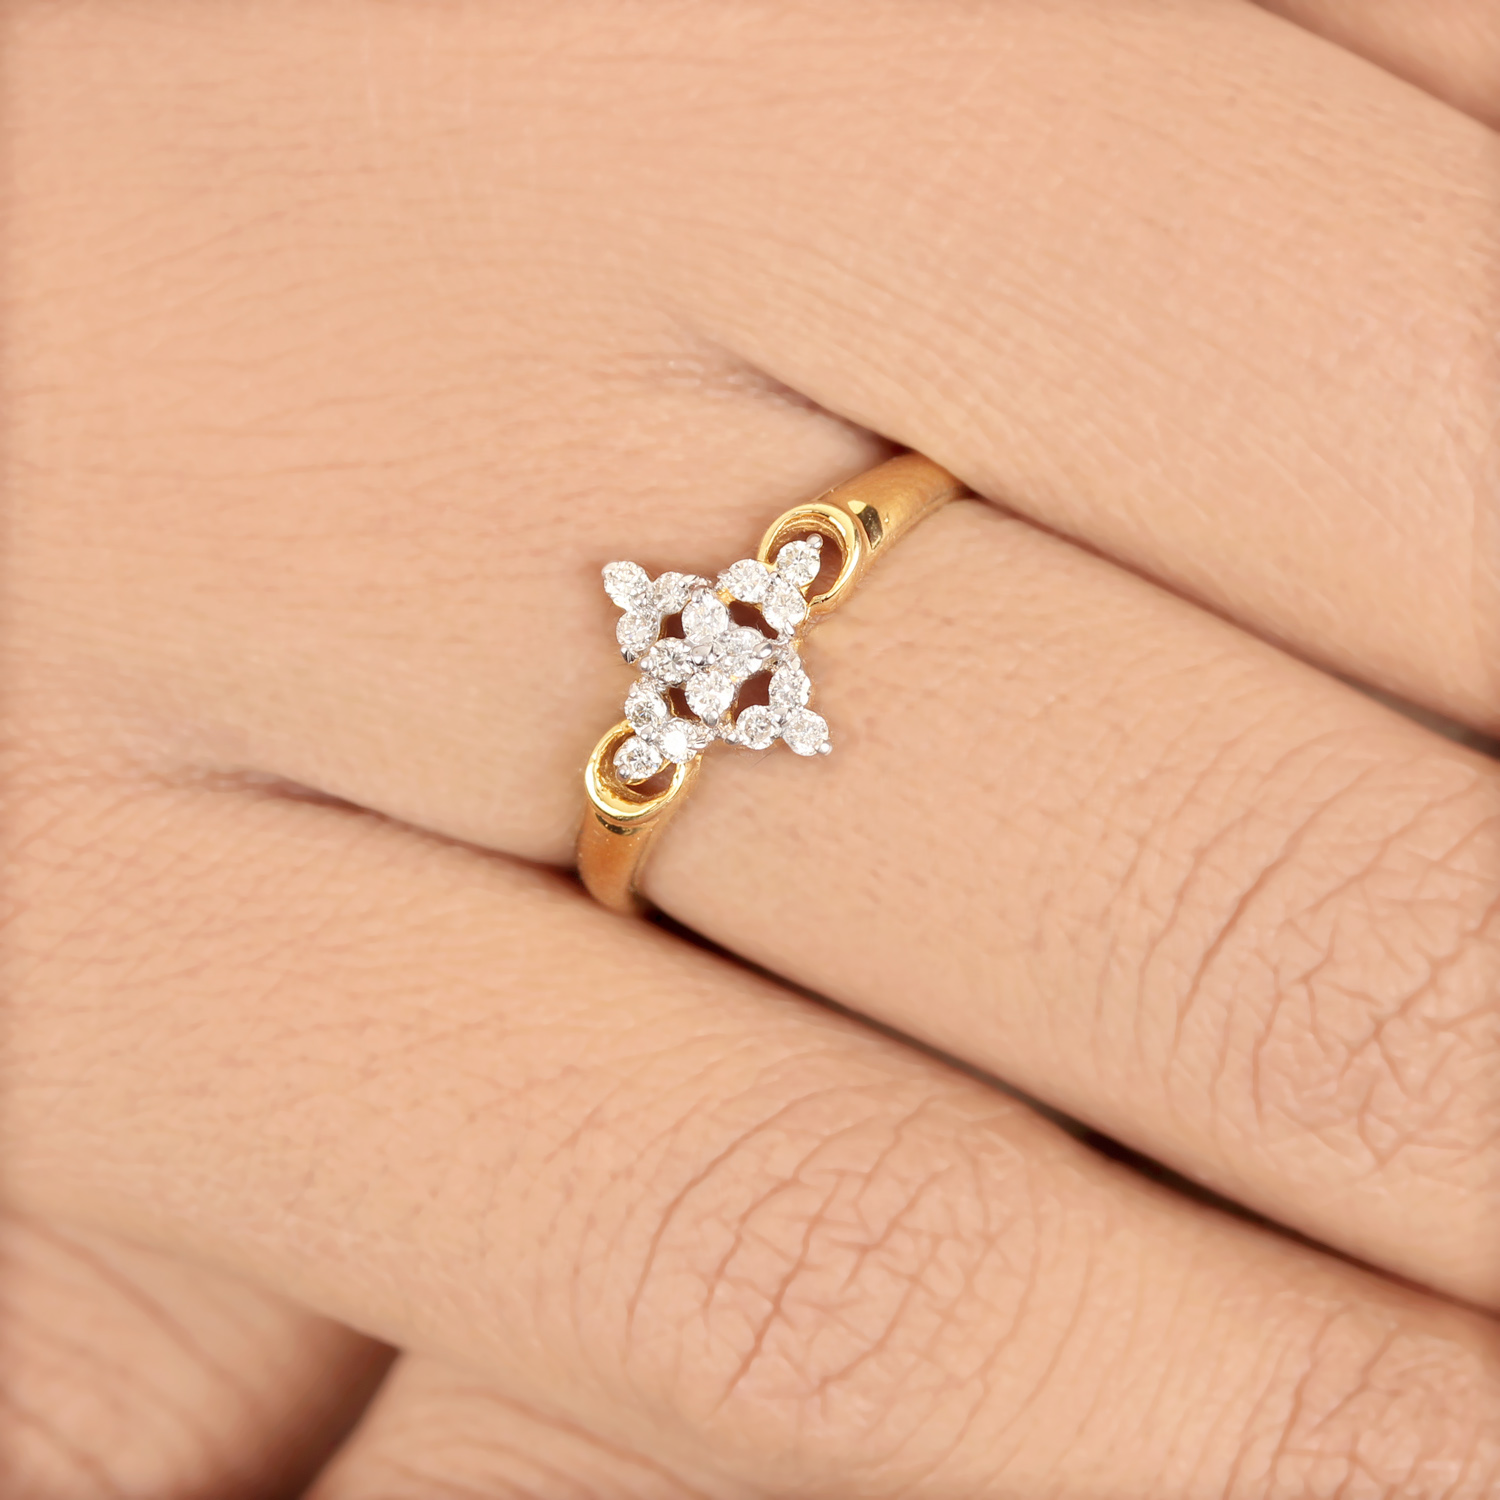 Gold Ring With Unique Design